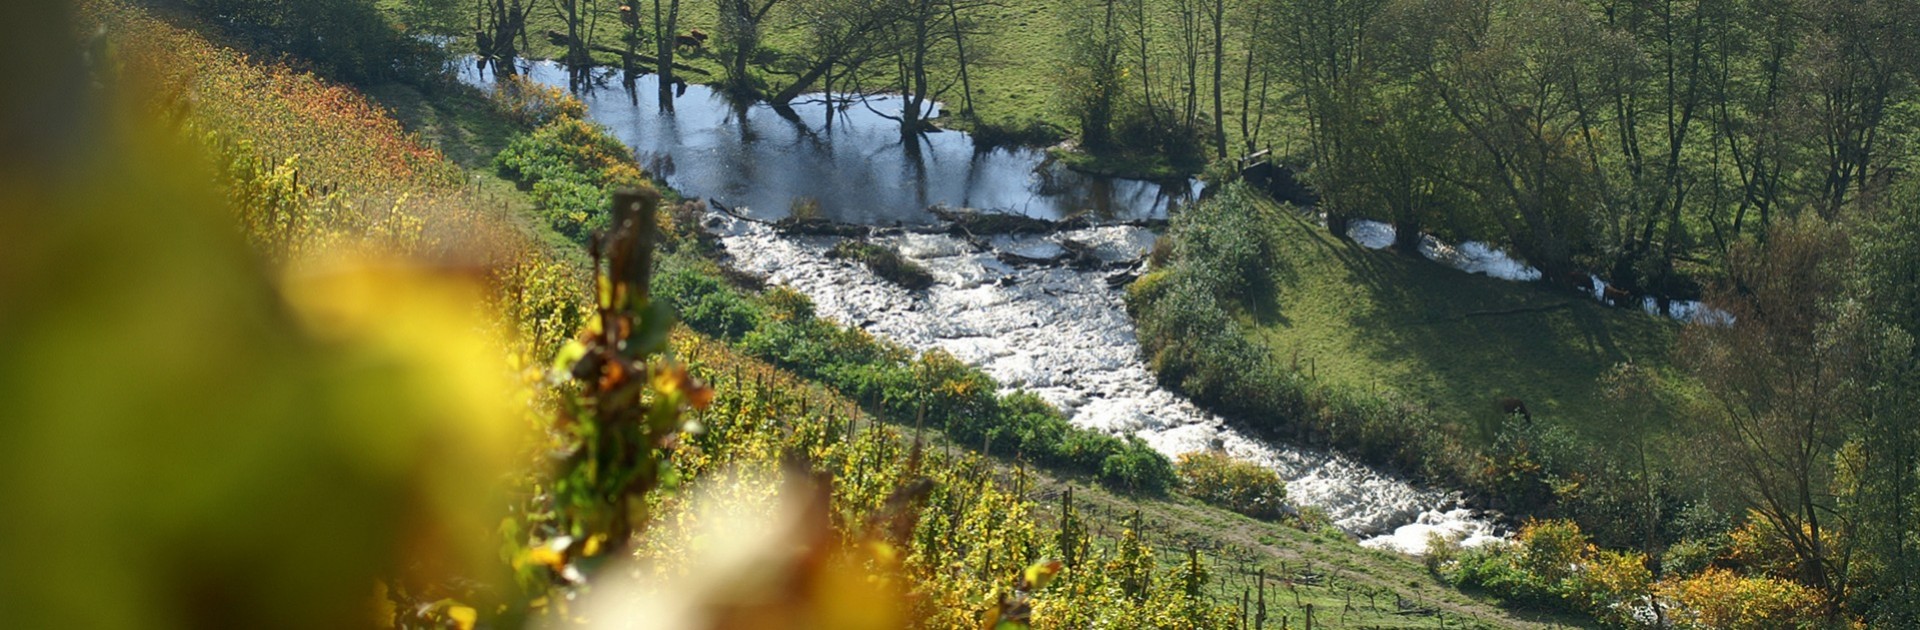 River vineyard